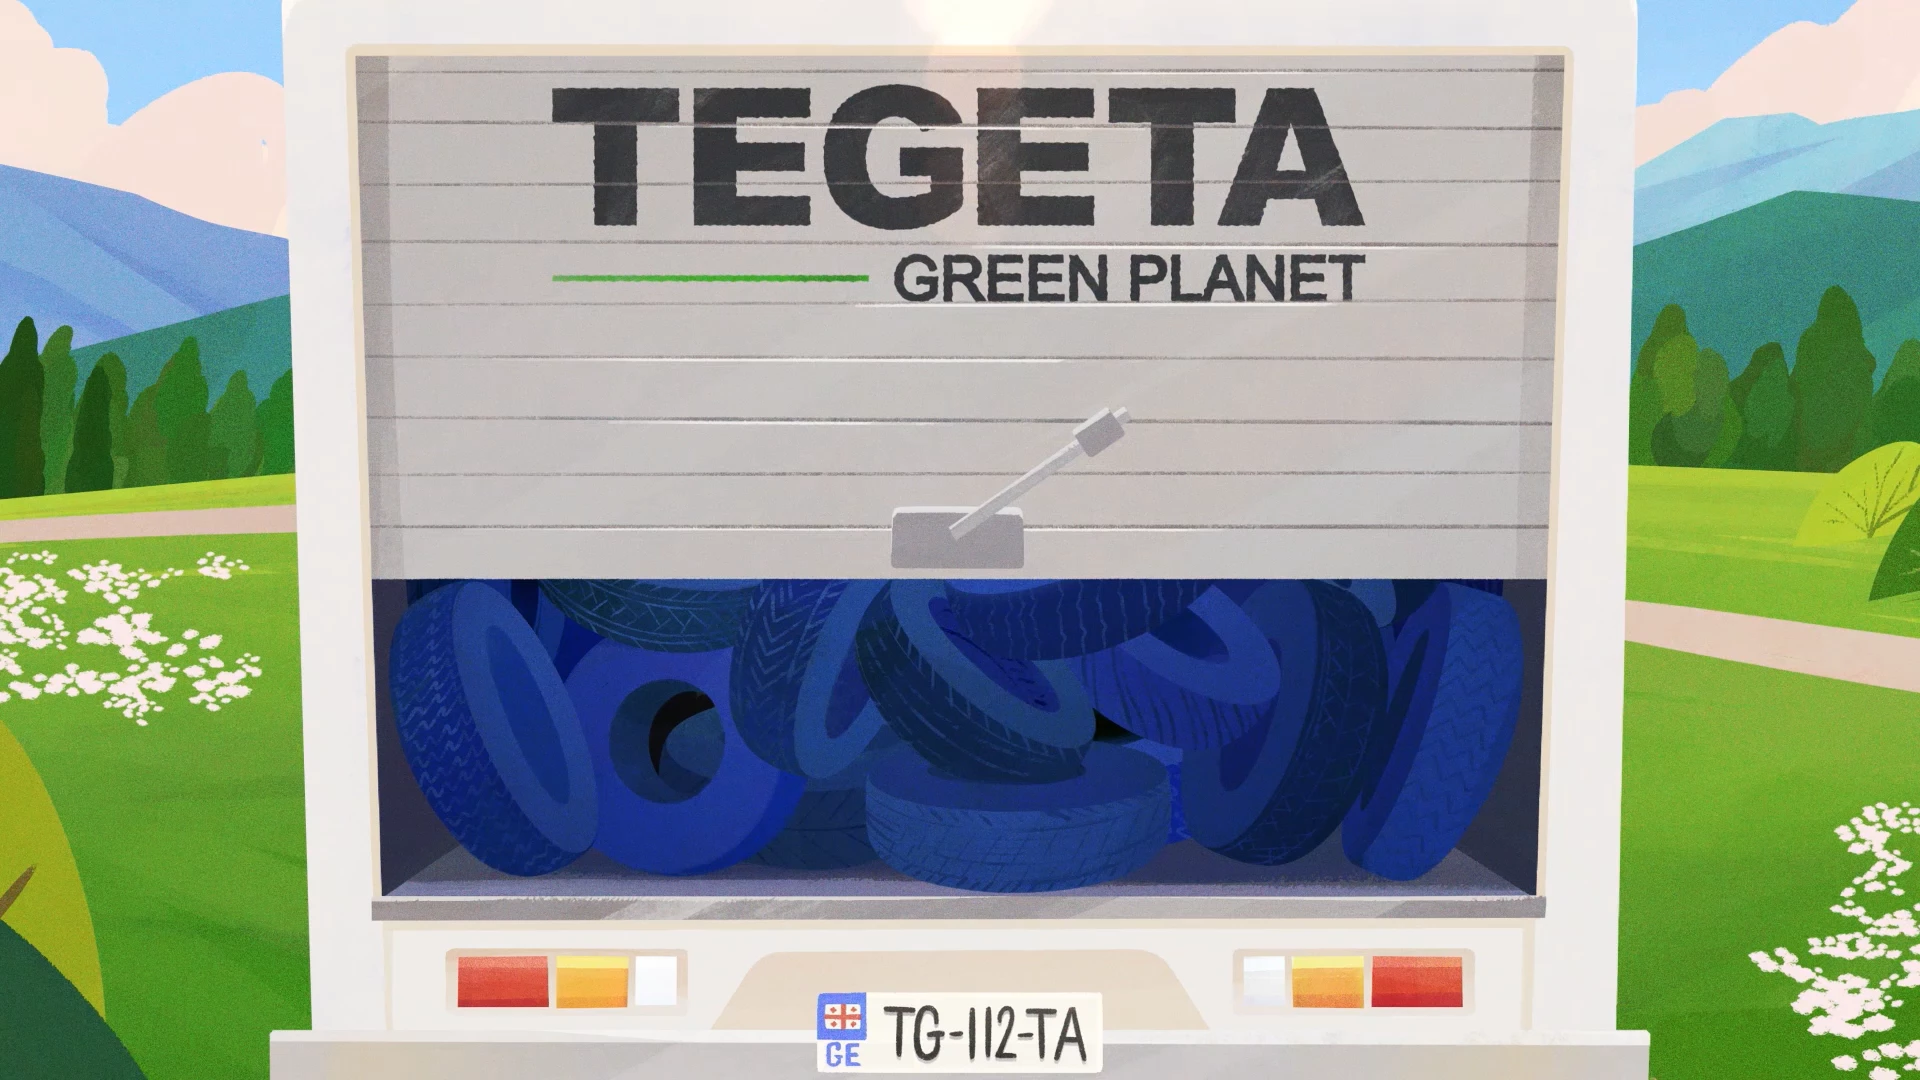 “Tegeta Green Planet”s environmental video at “Tegeta” affiliates